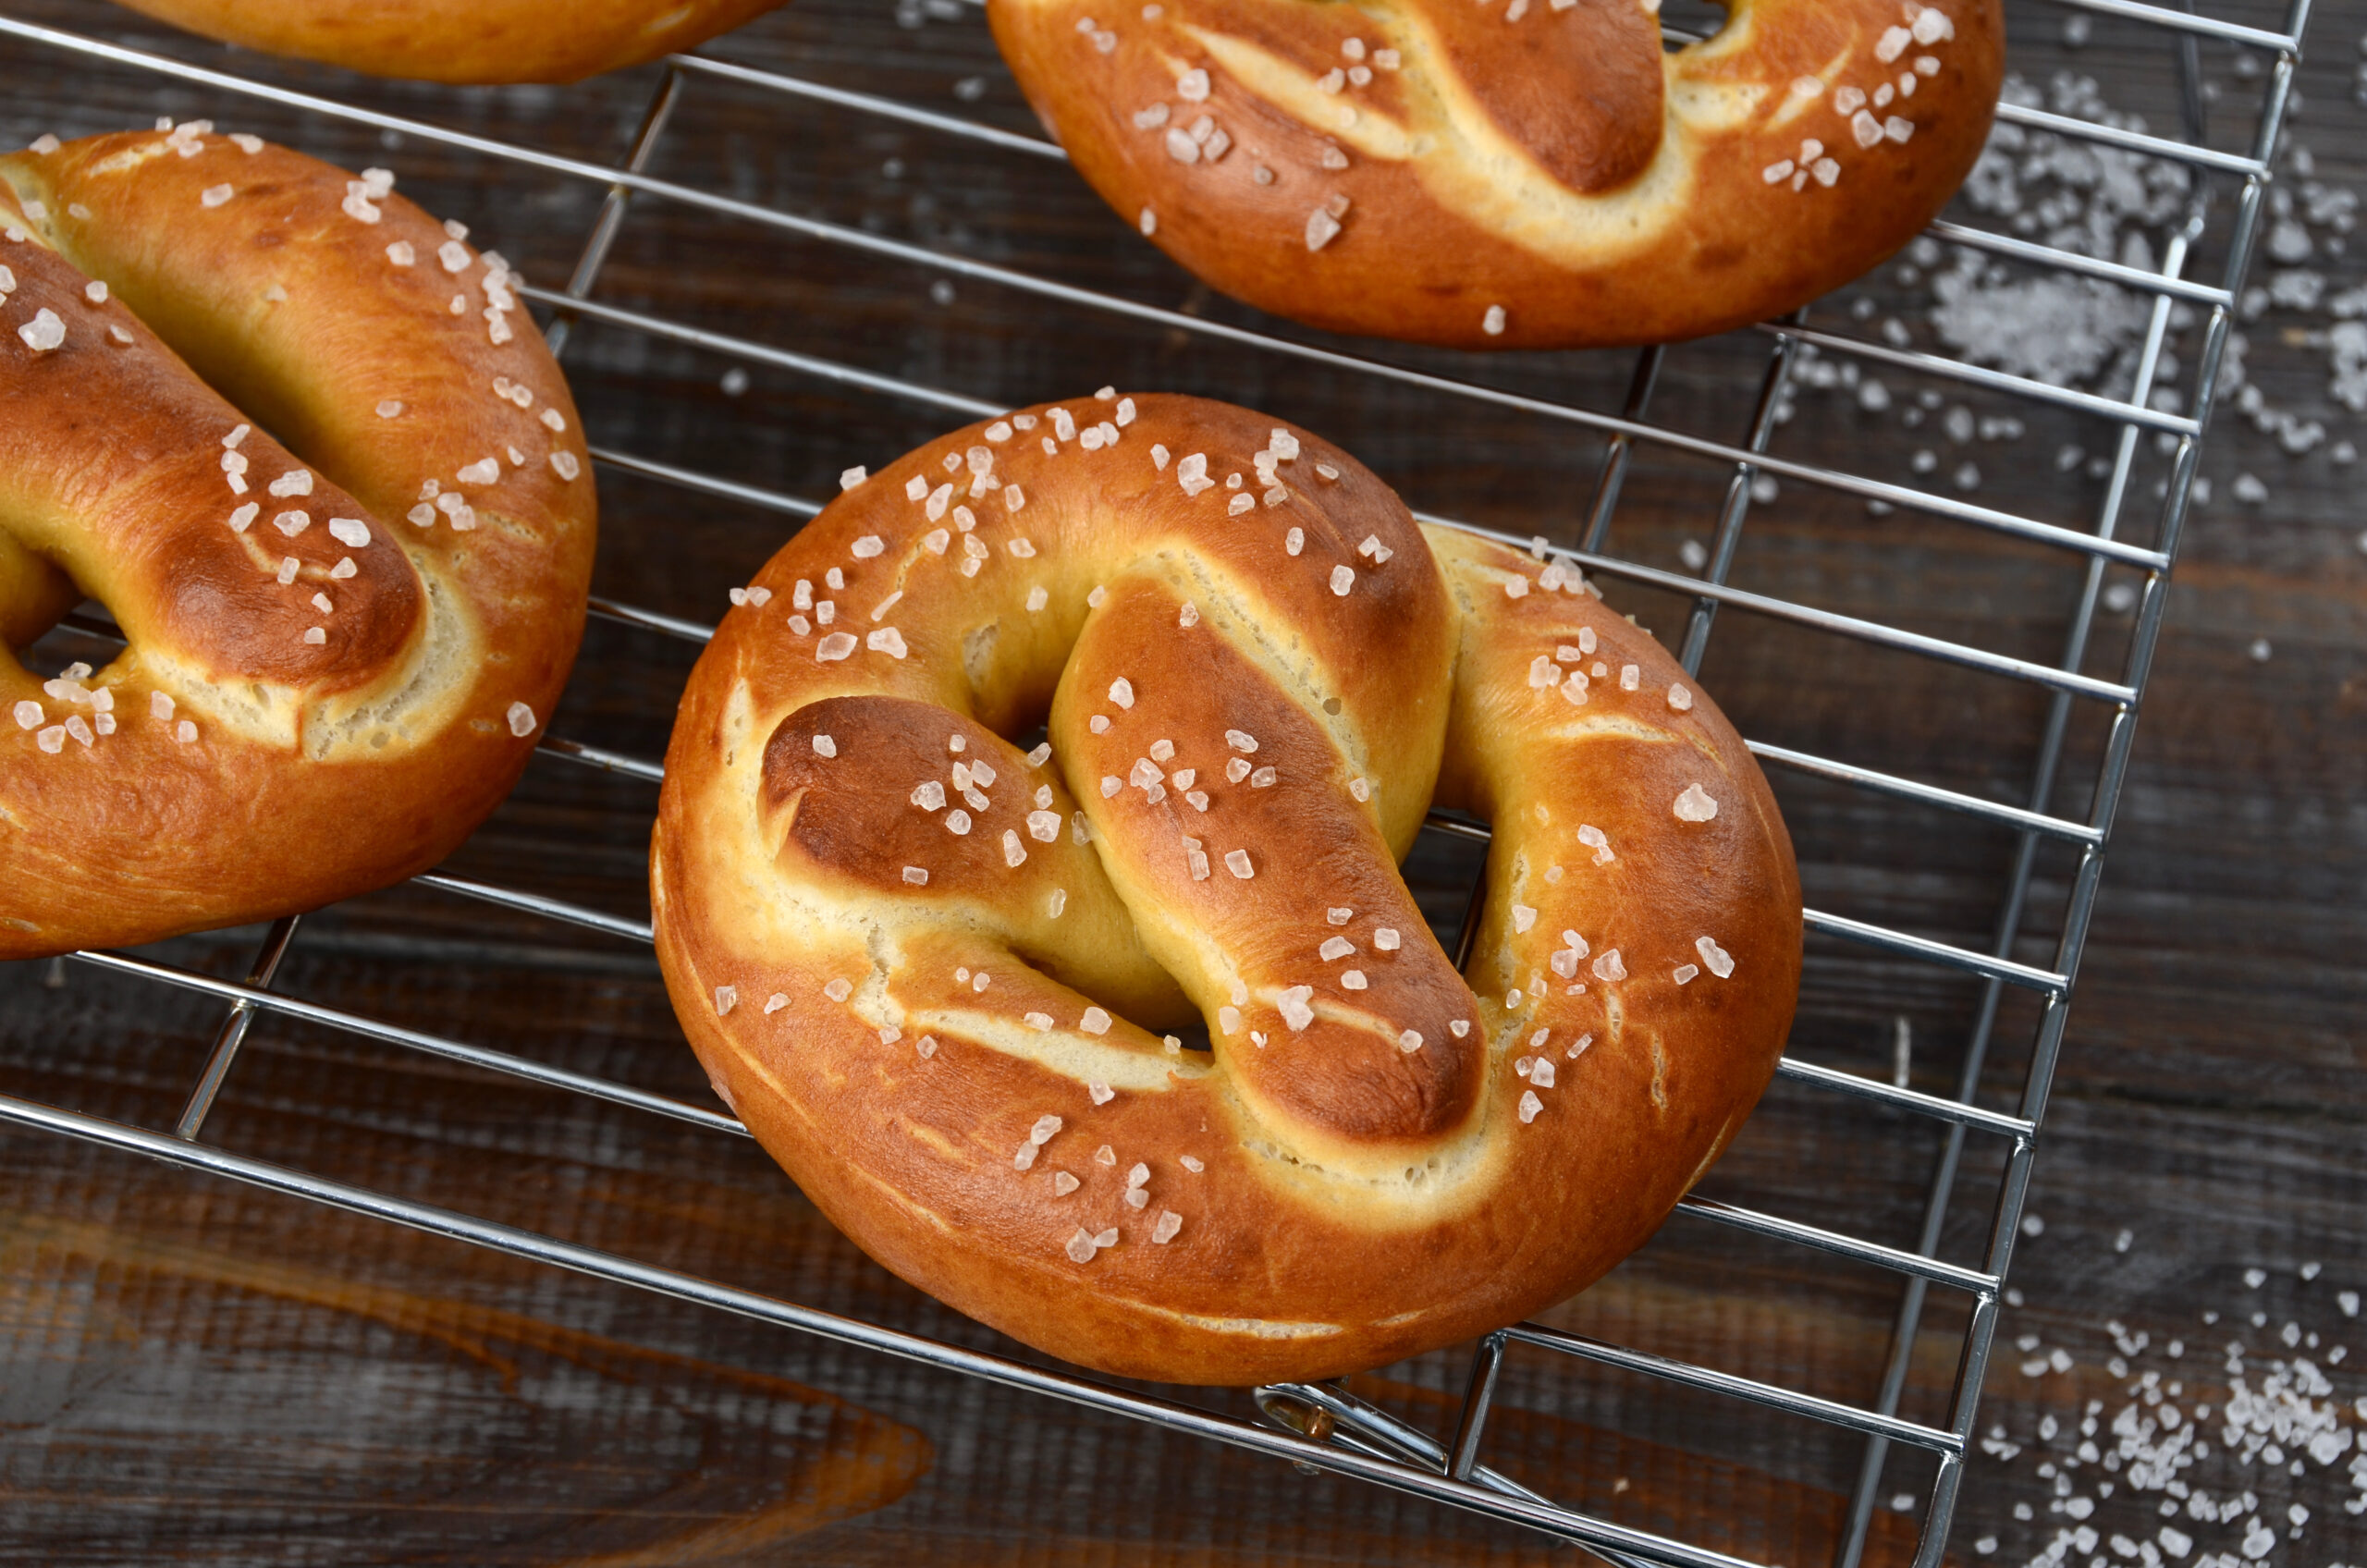 Freshly baked Bavarian style soft pretzels cool on a rack.